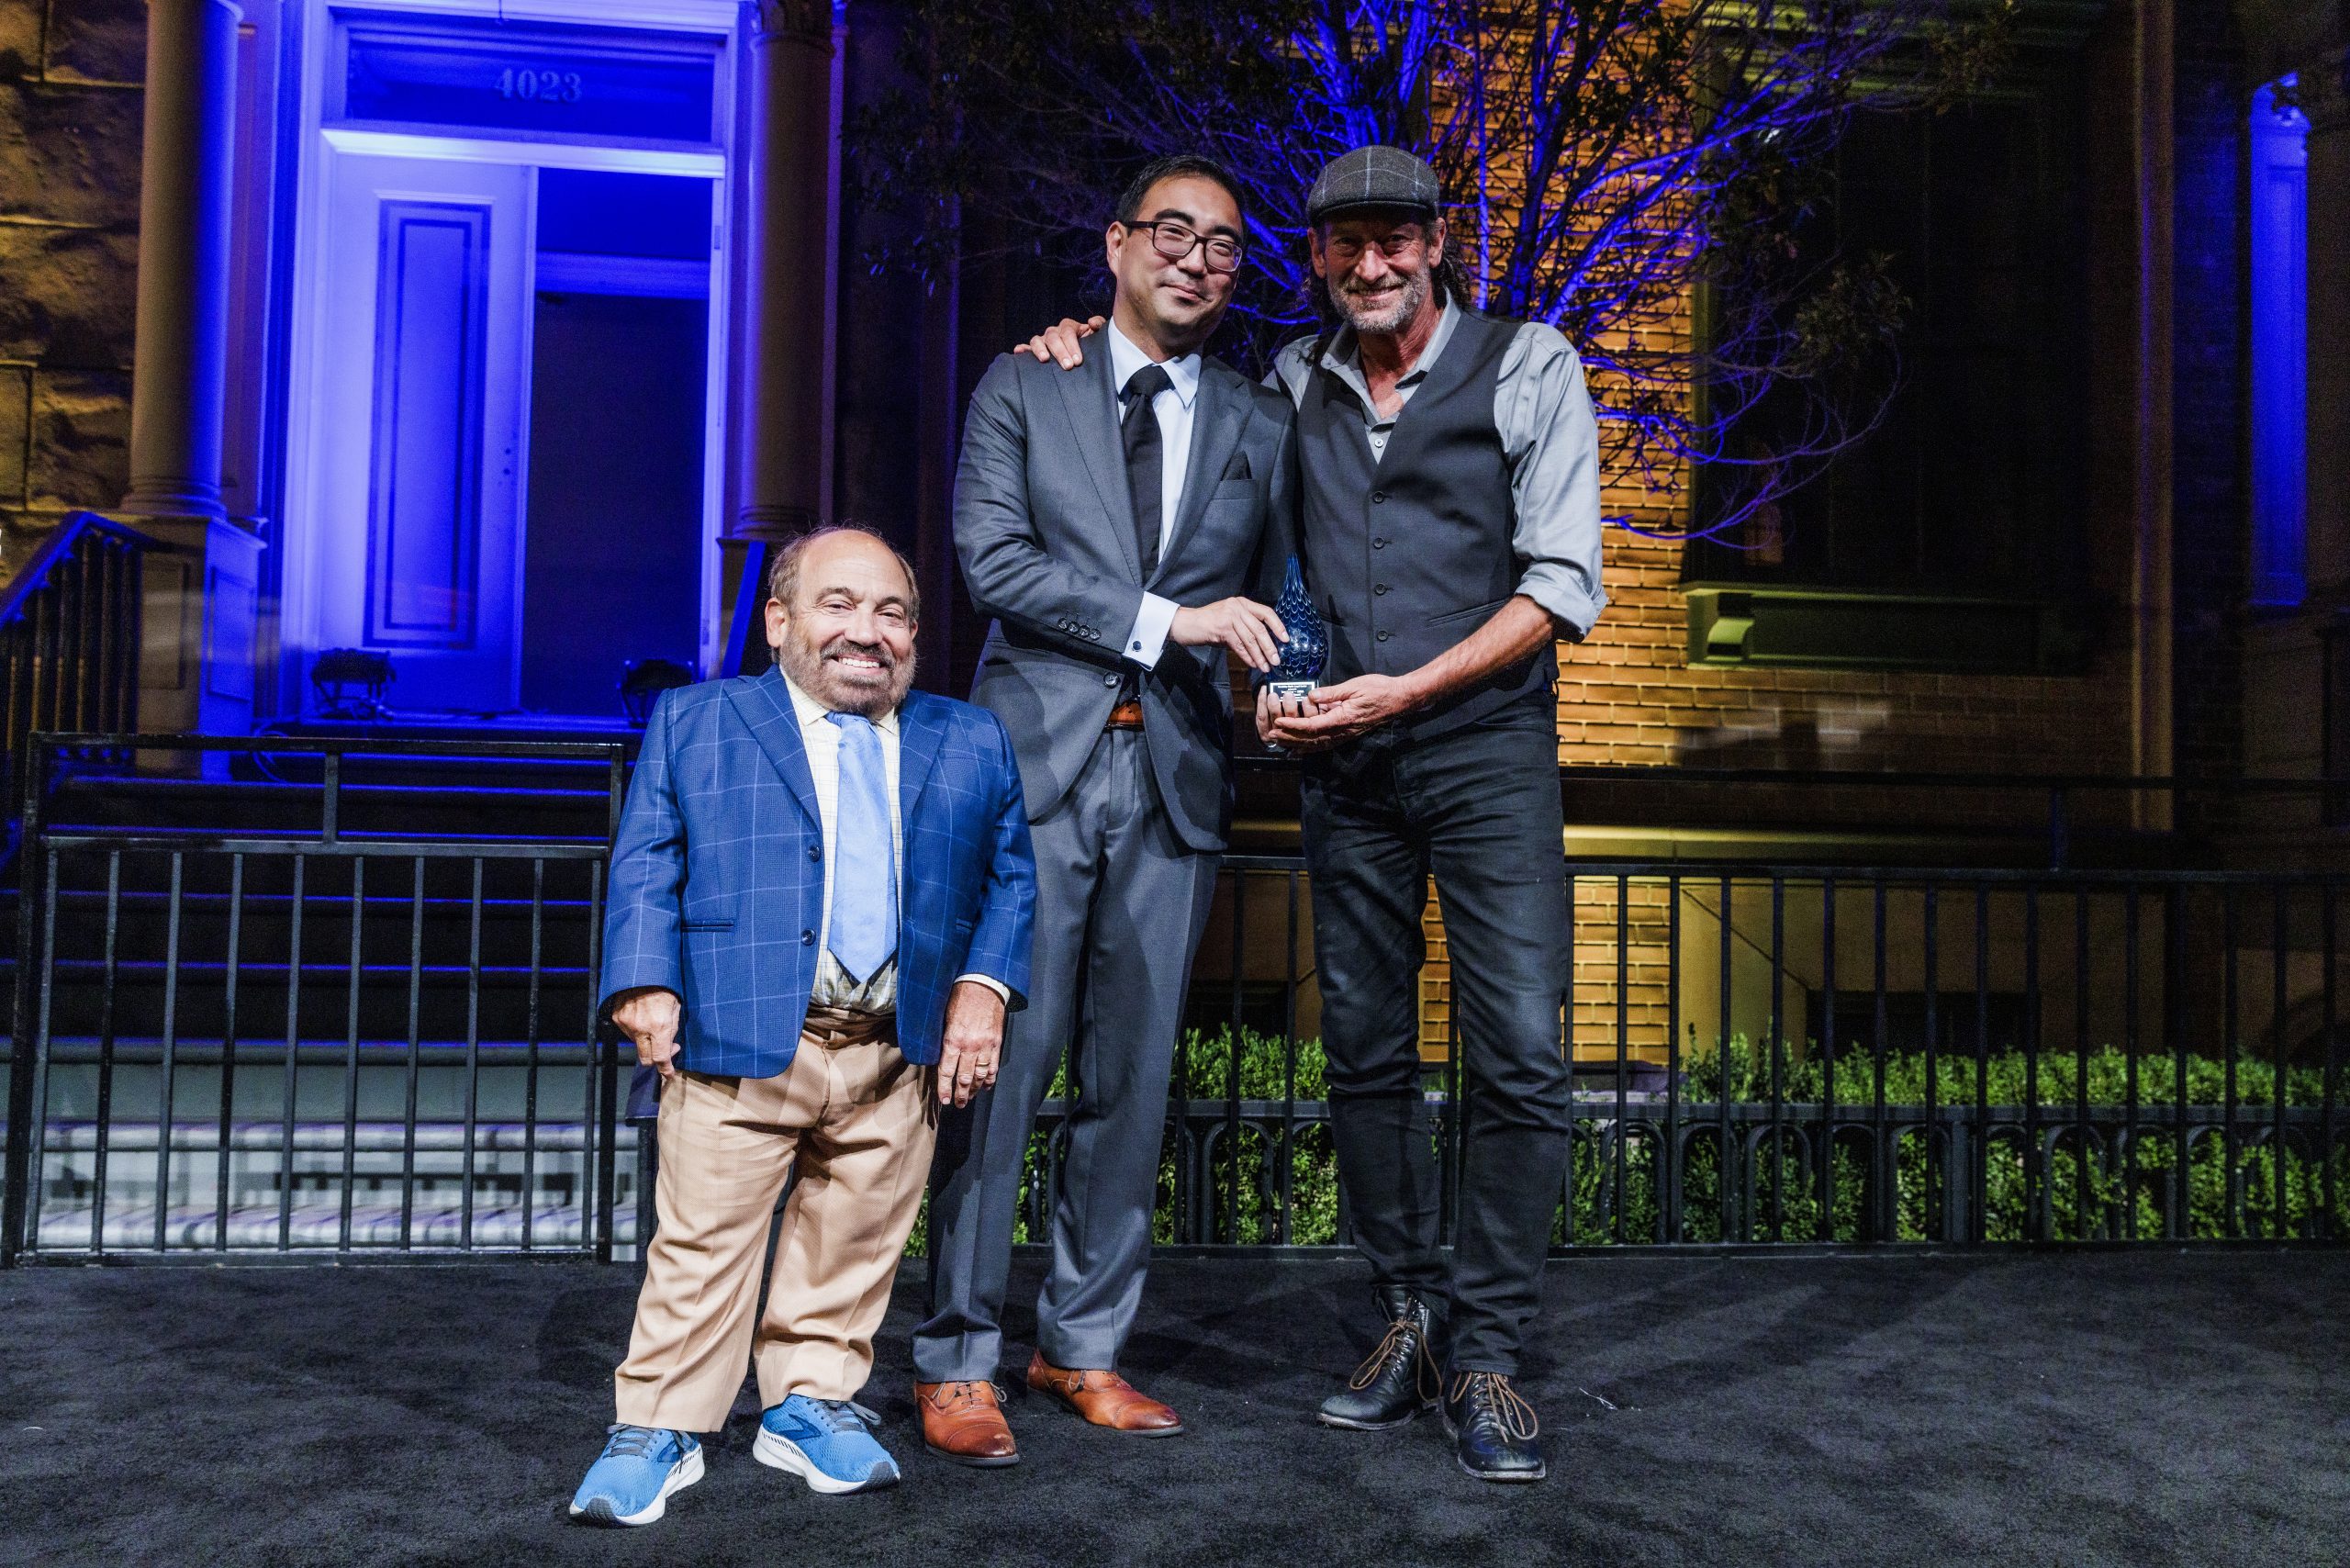 Danny Woodburn, Jordan Kough, and Troy Kotsur pose for a photo with Kotsur's DREAM award, a blue glass teardrop, on stage